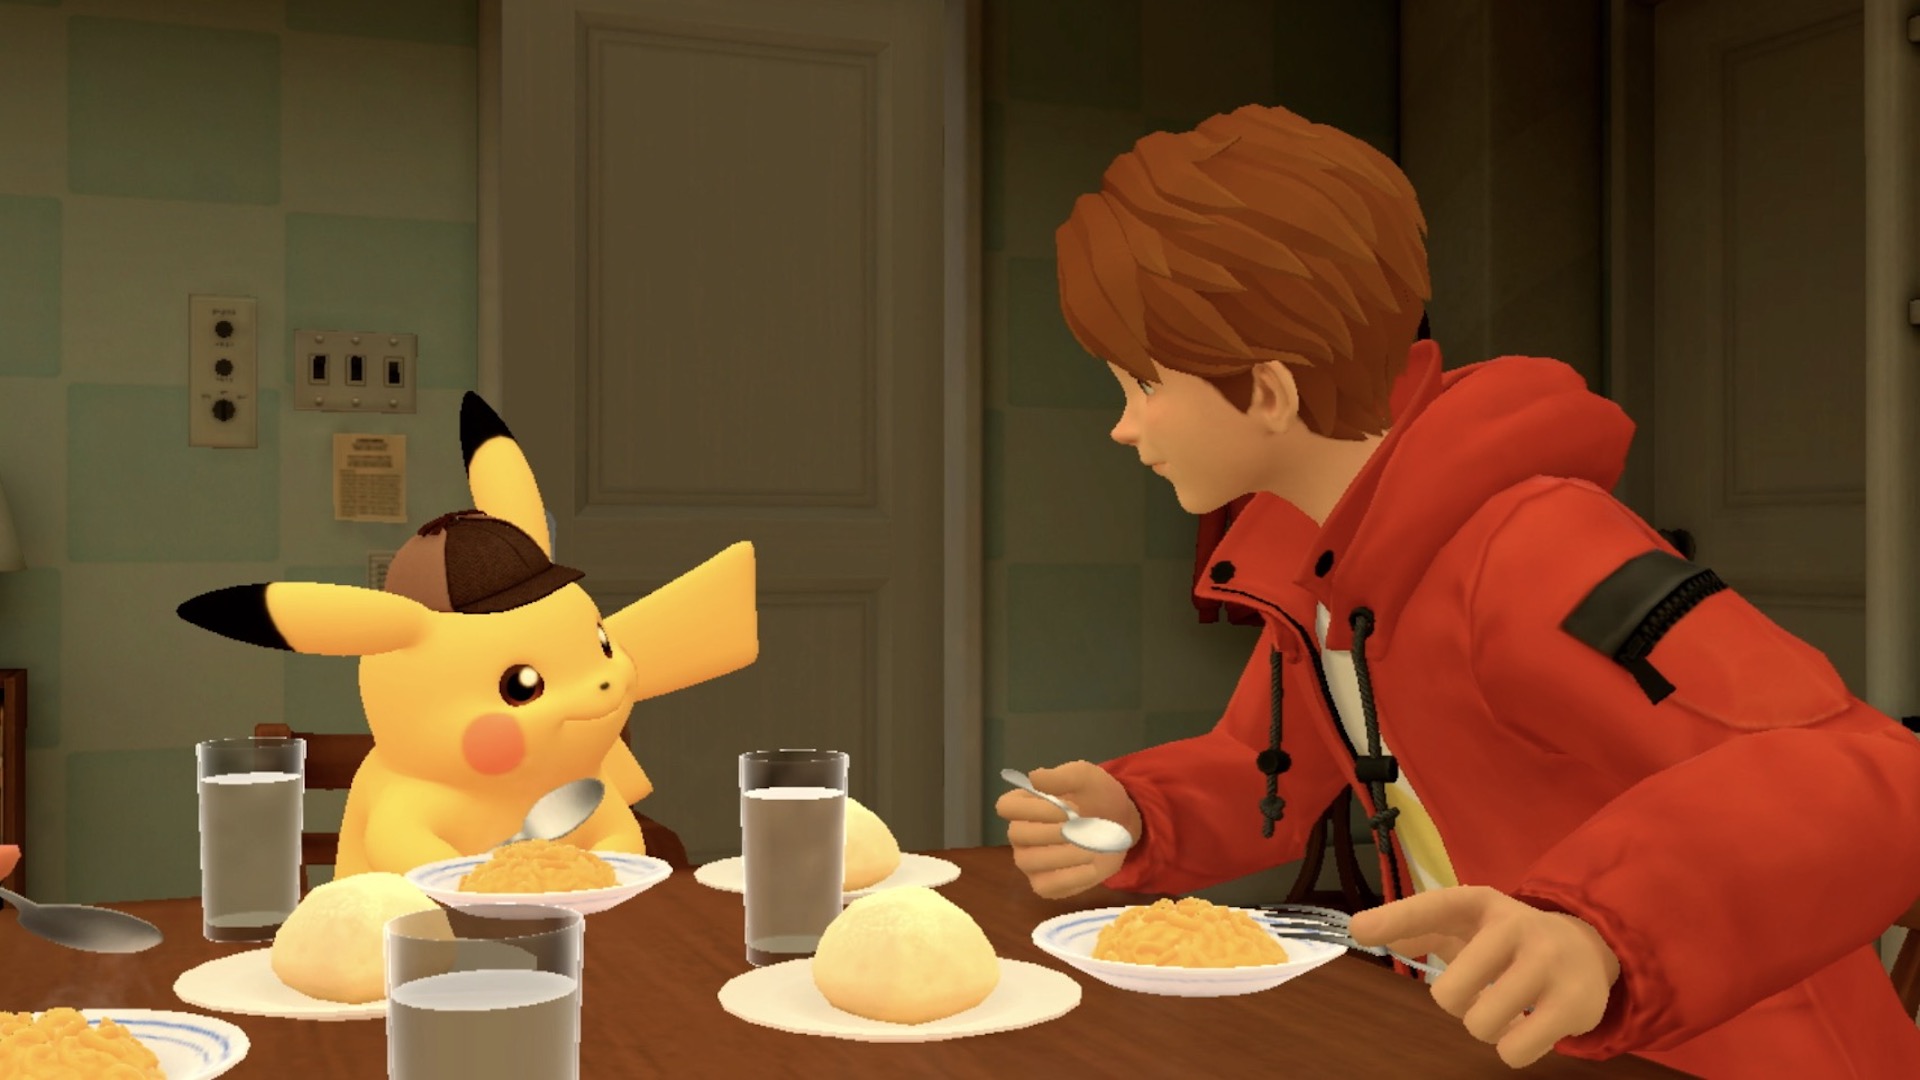 Detective Pikachu and Tim Goodman eat dinner together